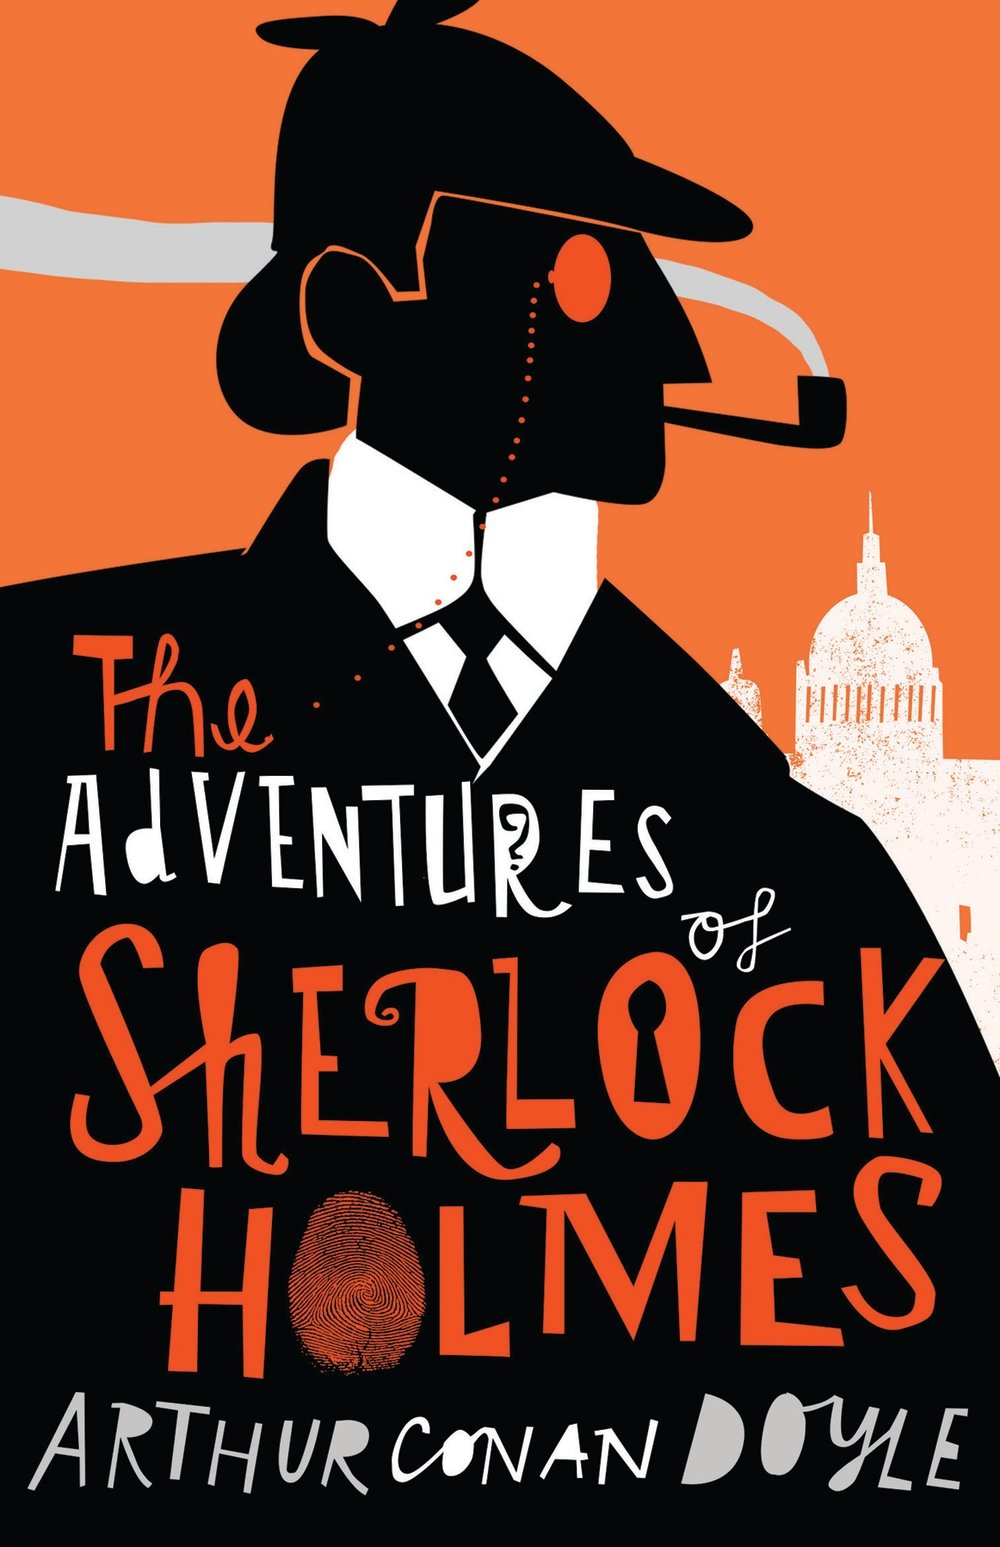 Adventures of Sherlock Holmes | Sir Arthur Conan Doyle